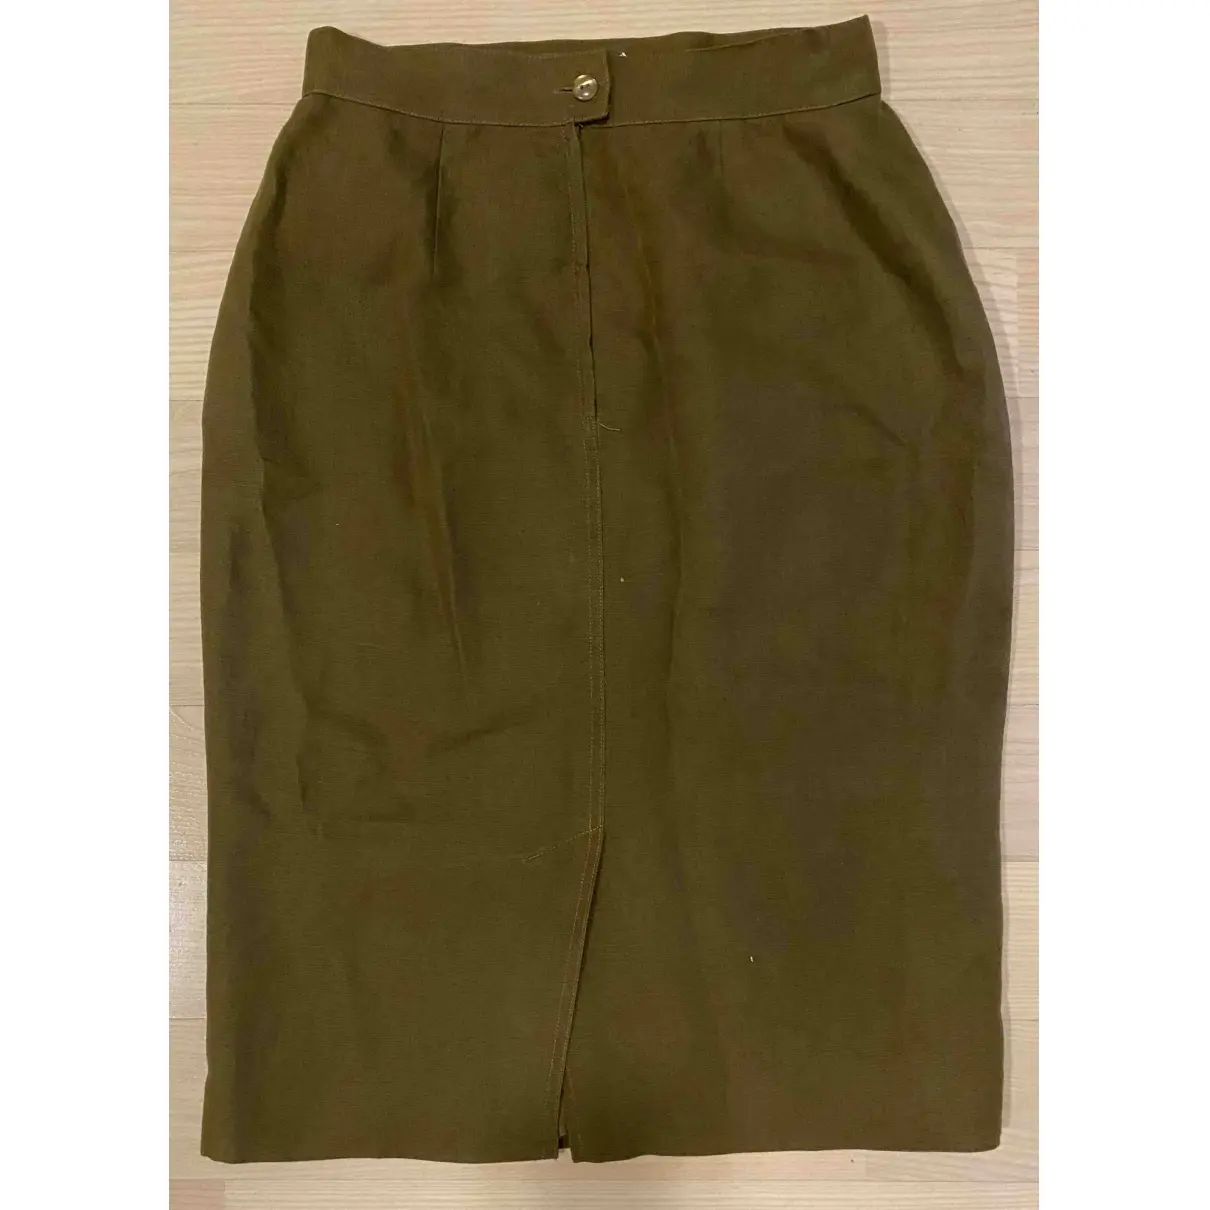 Buy Marella Linen mid-length skirt online